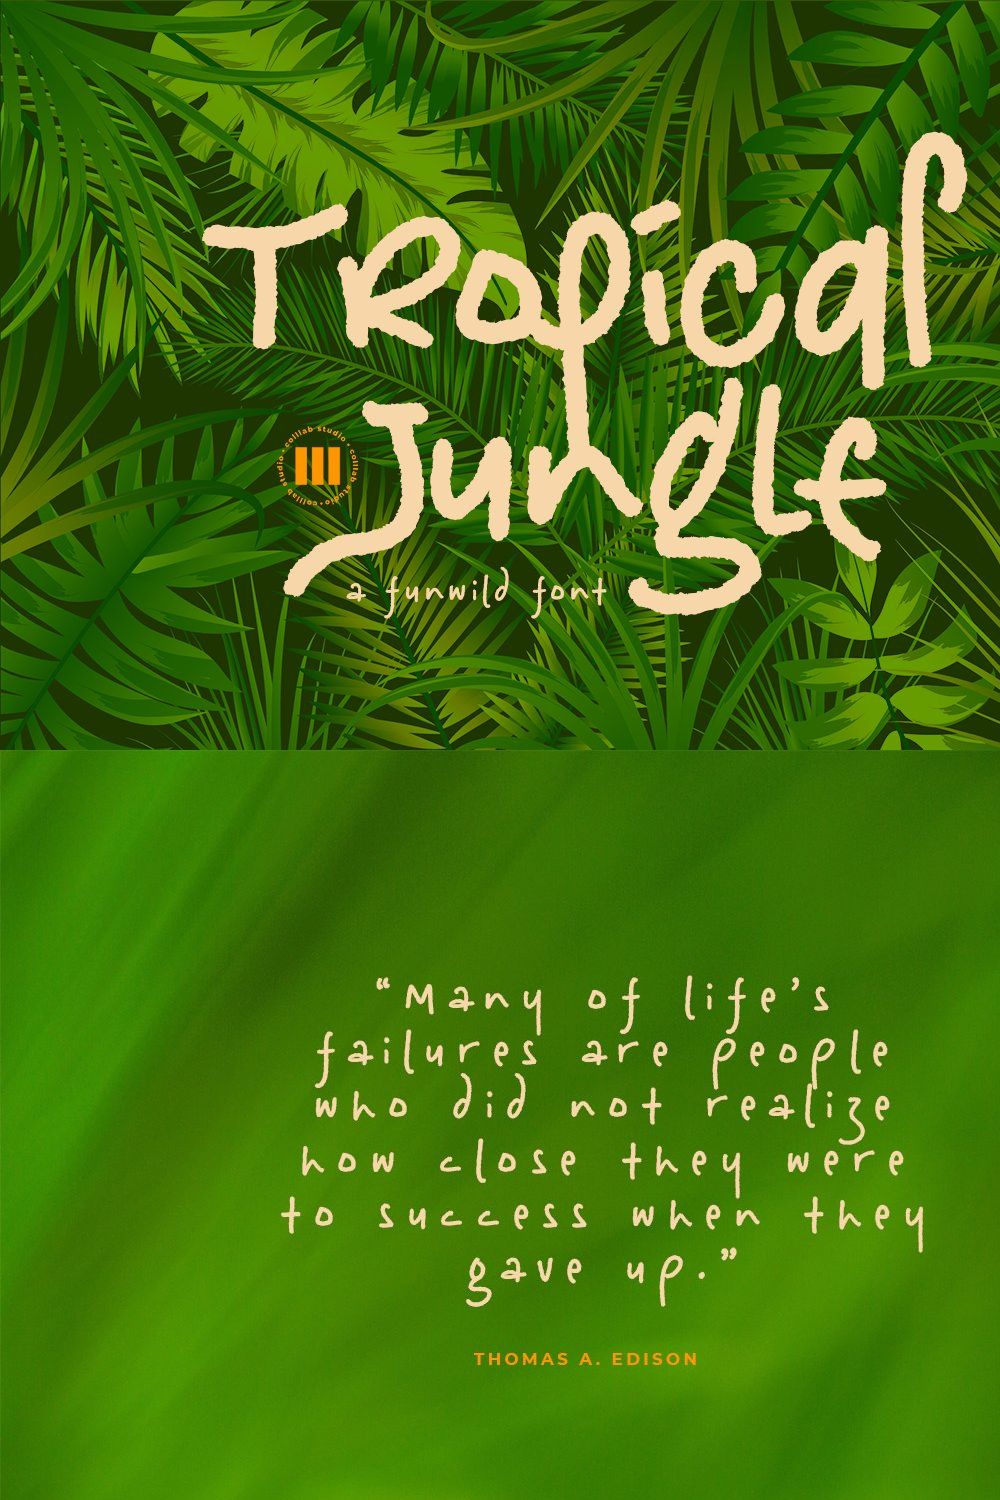 Tropical Jungle | A Funwild Font pinterest preview image.